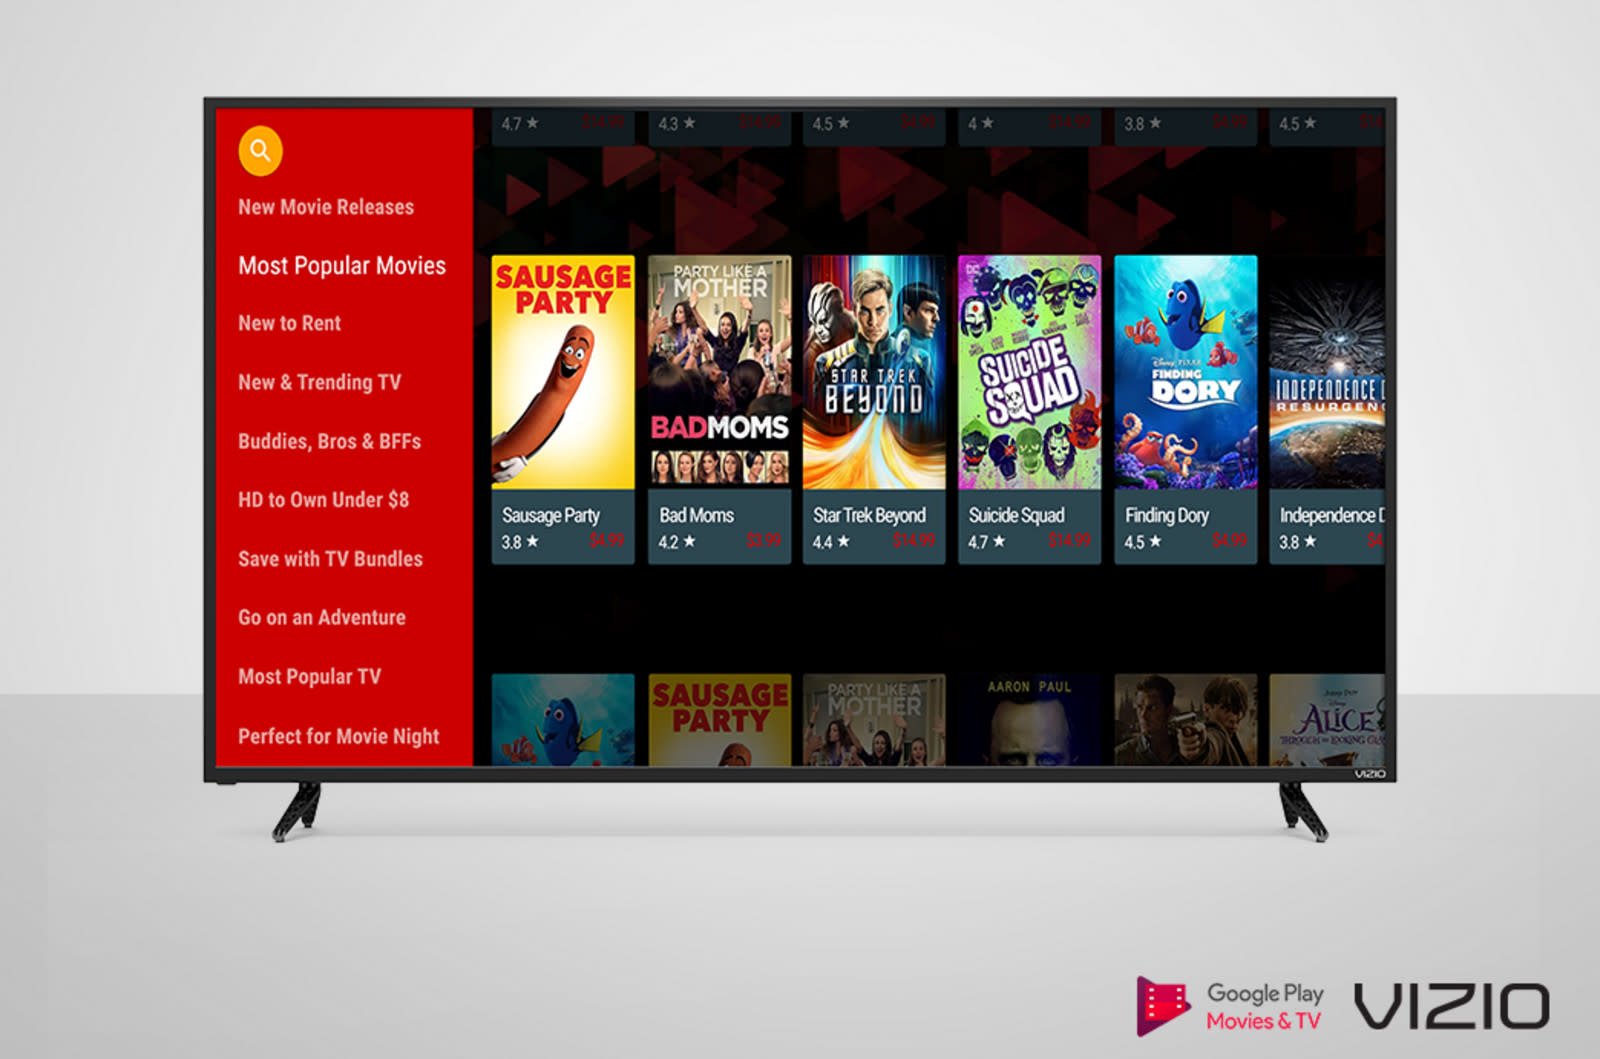 Vizio TVs add the Google Play video app